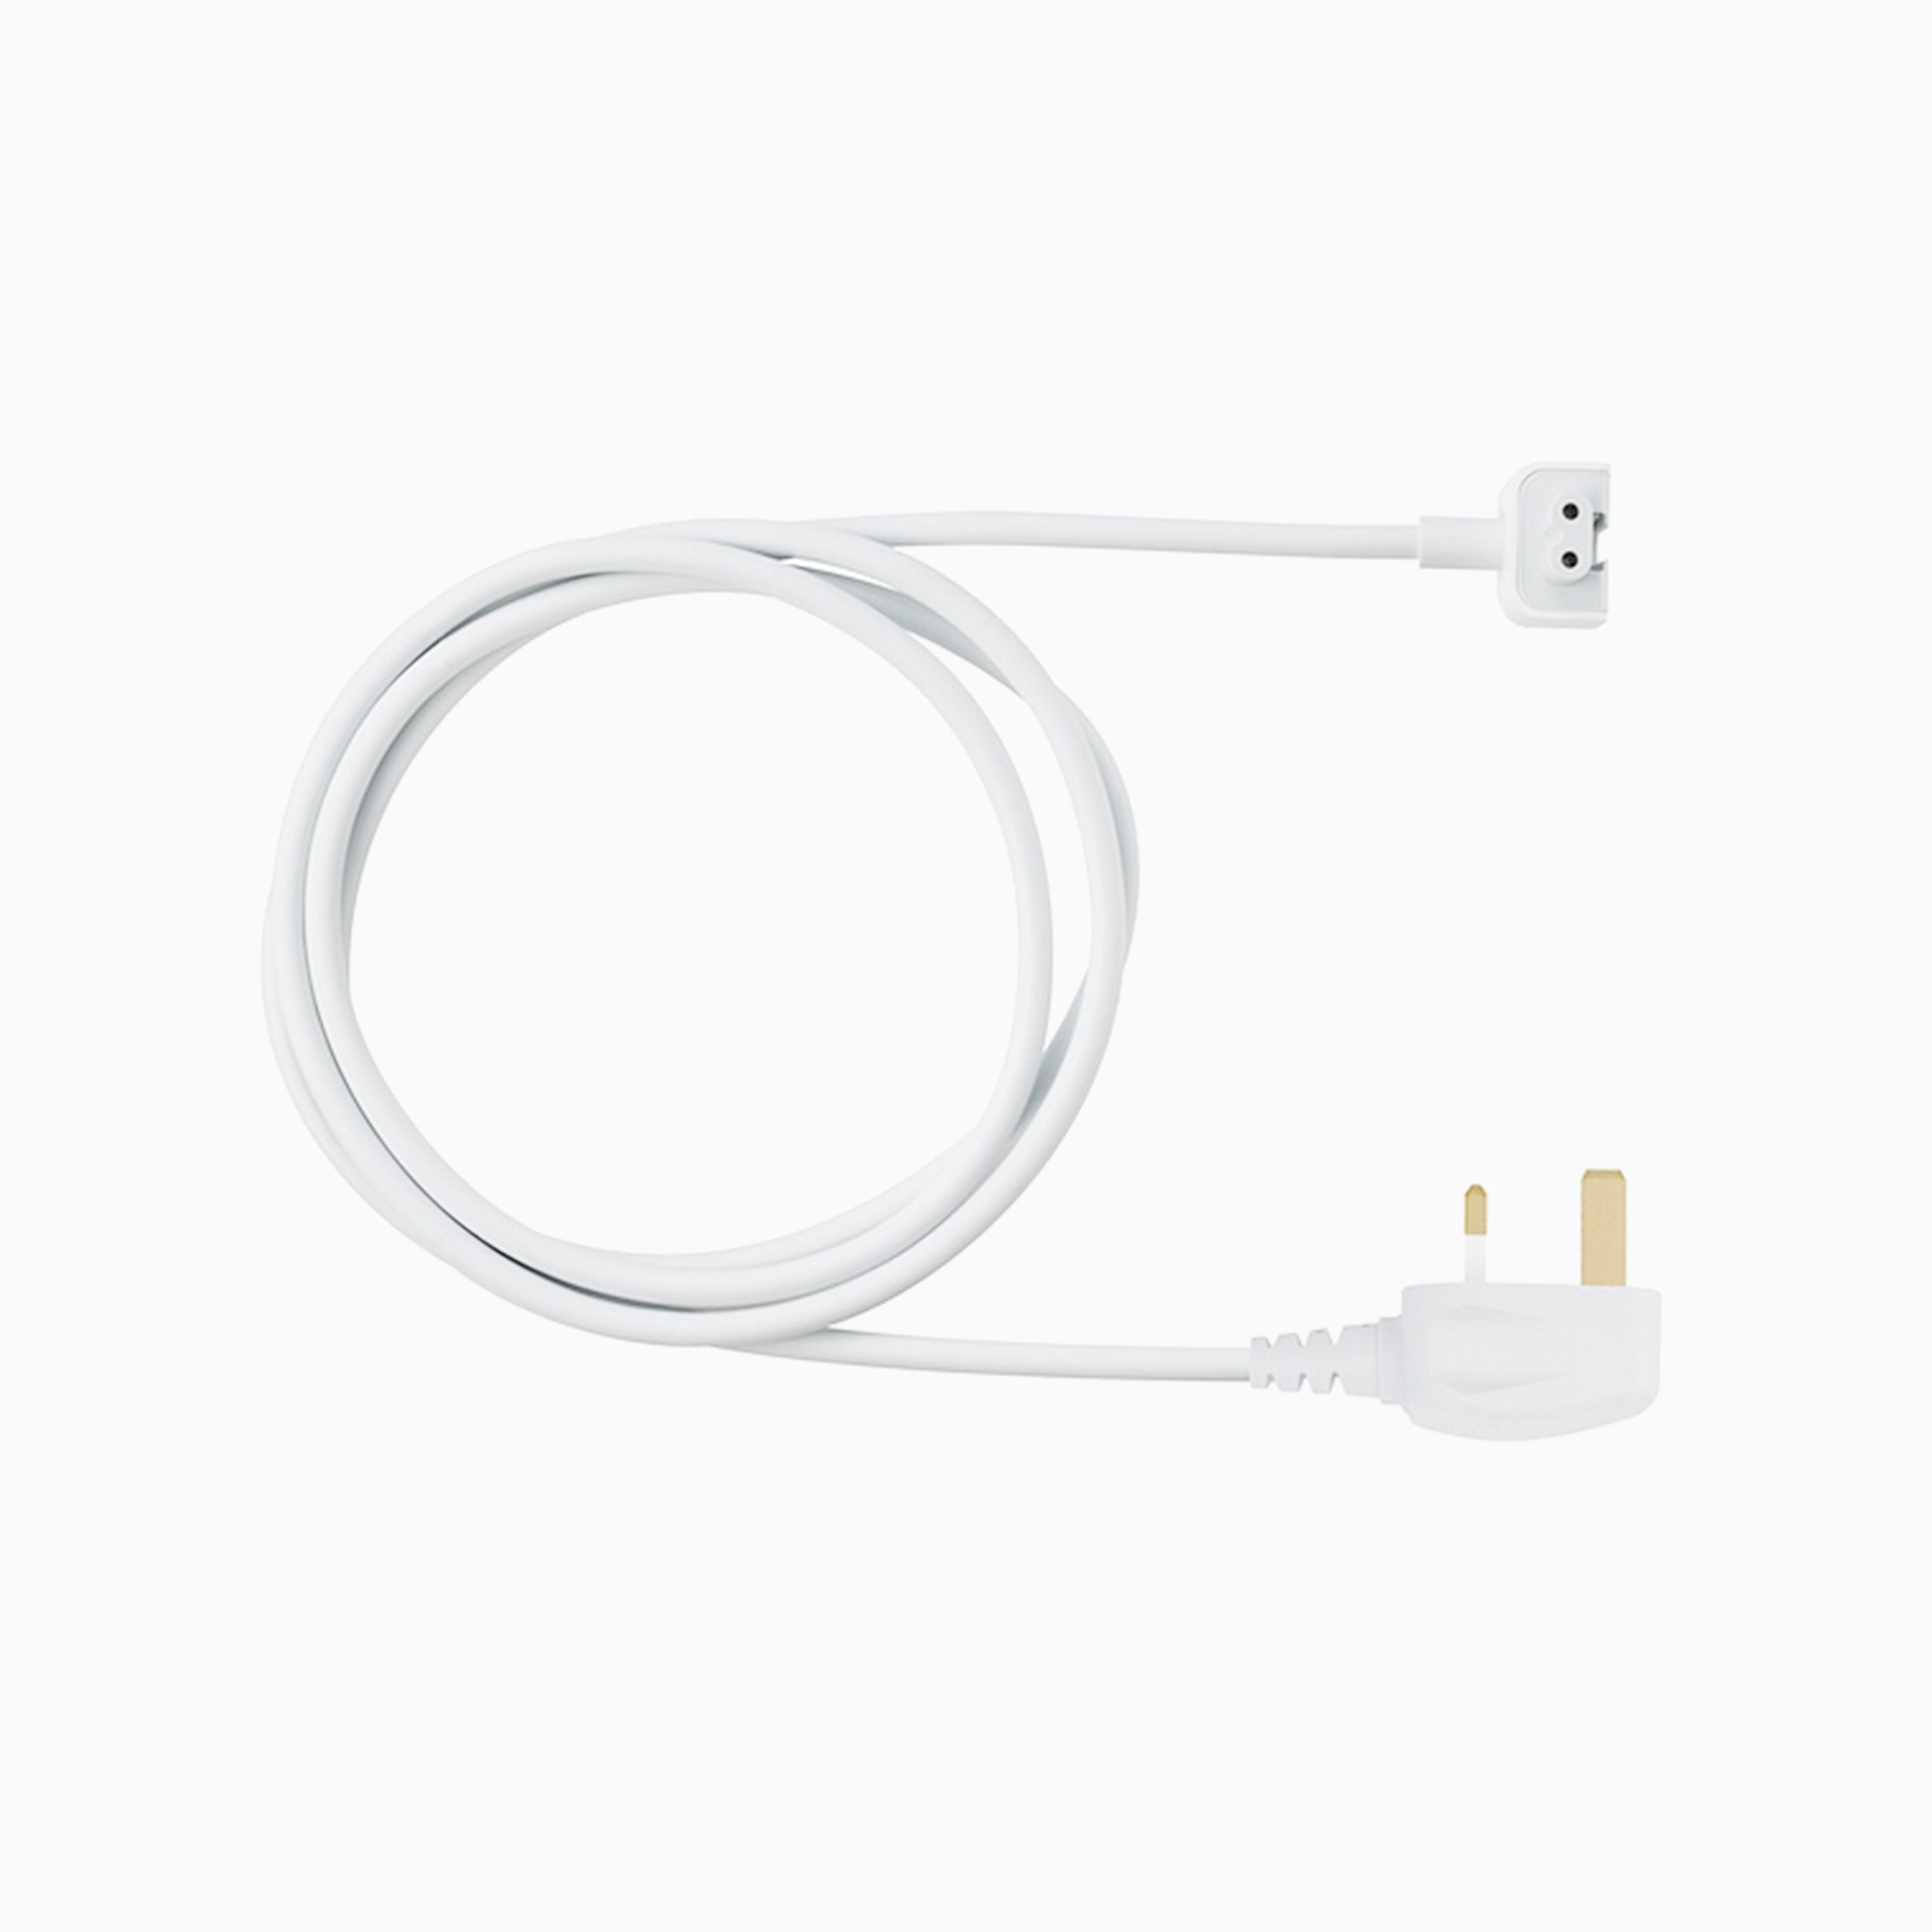 1 x Apple MacBook Pro Retina 15 Inch Quad-Core i7 2.20 GHz (2015)